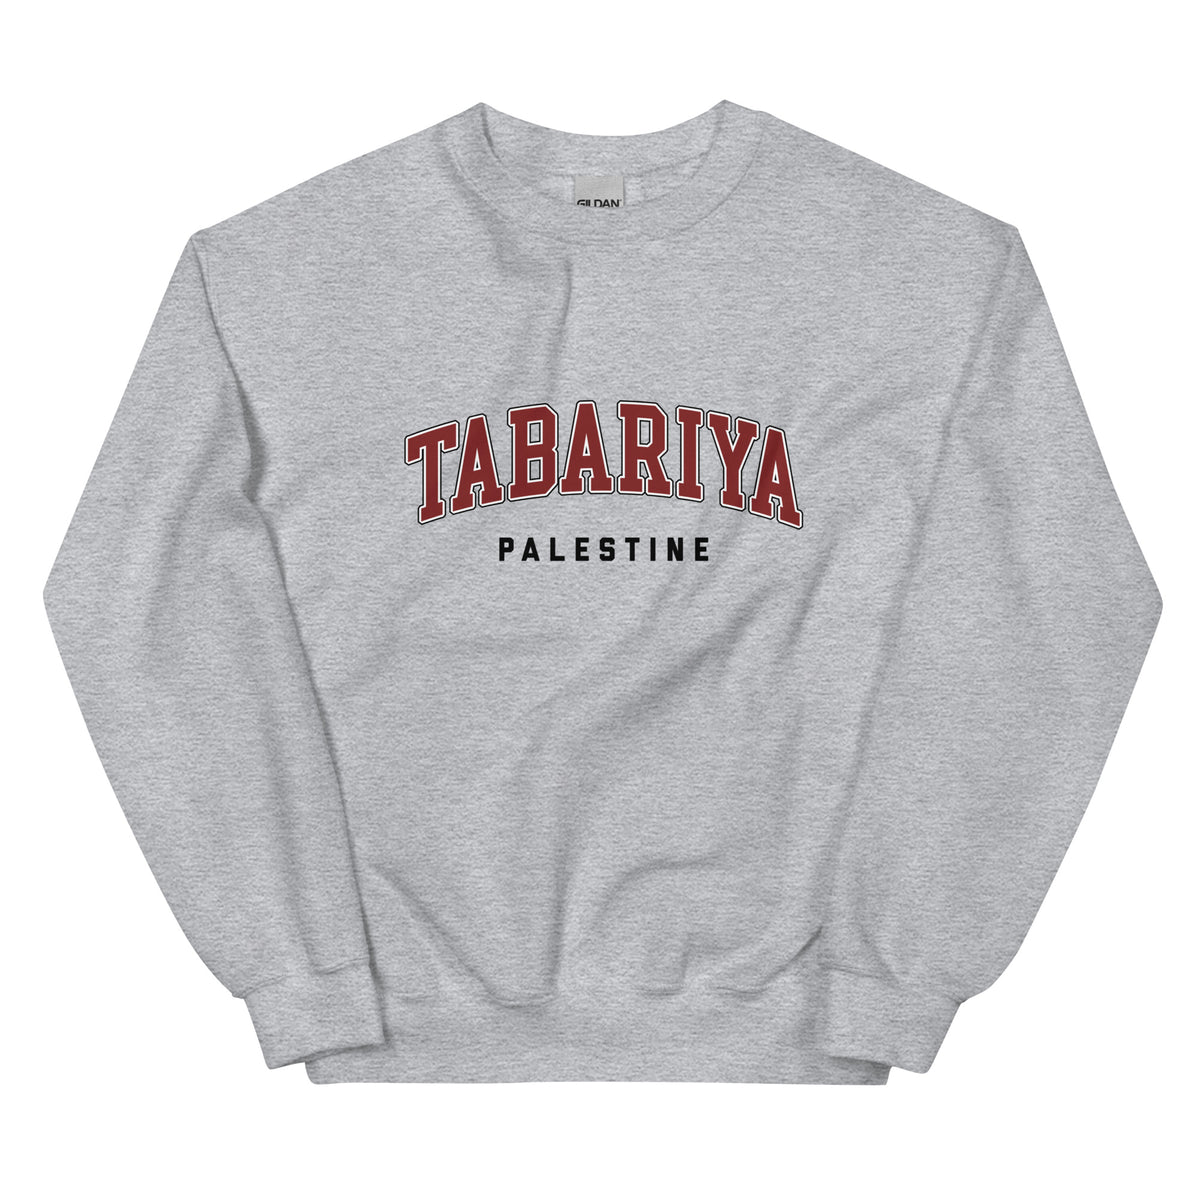 Tabariya, Palestine - Sweatshirt